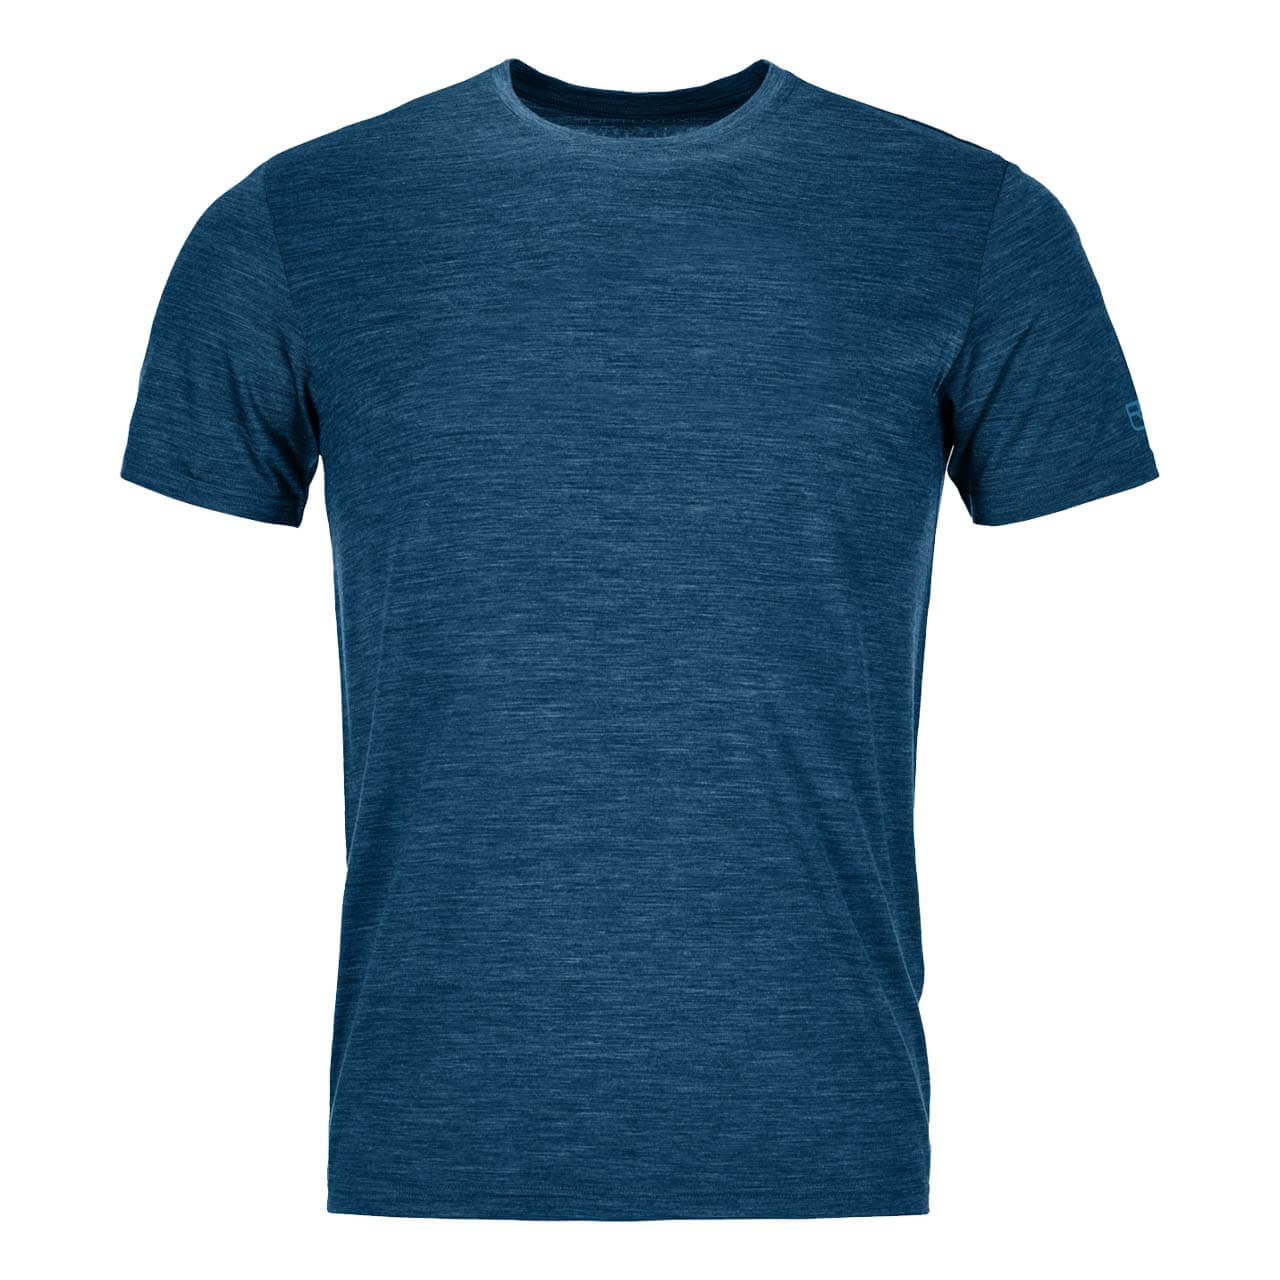 Ortovox Merino T-Shirt 150 Cool Clean - Petrol Blue Blend, M